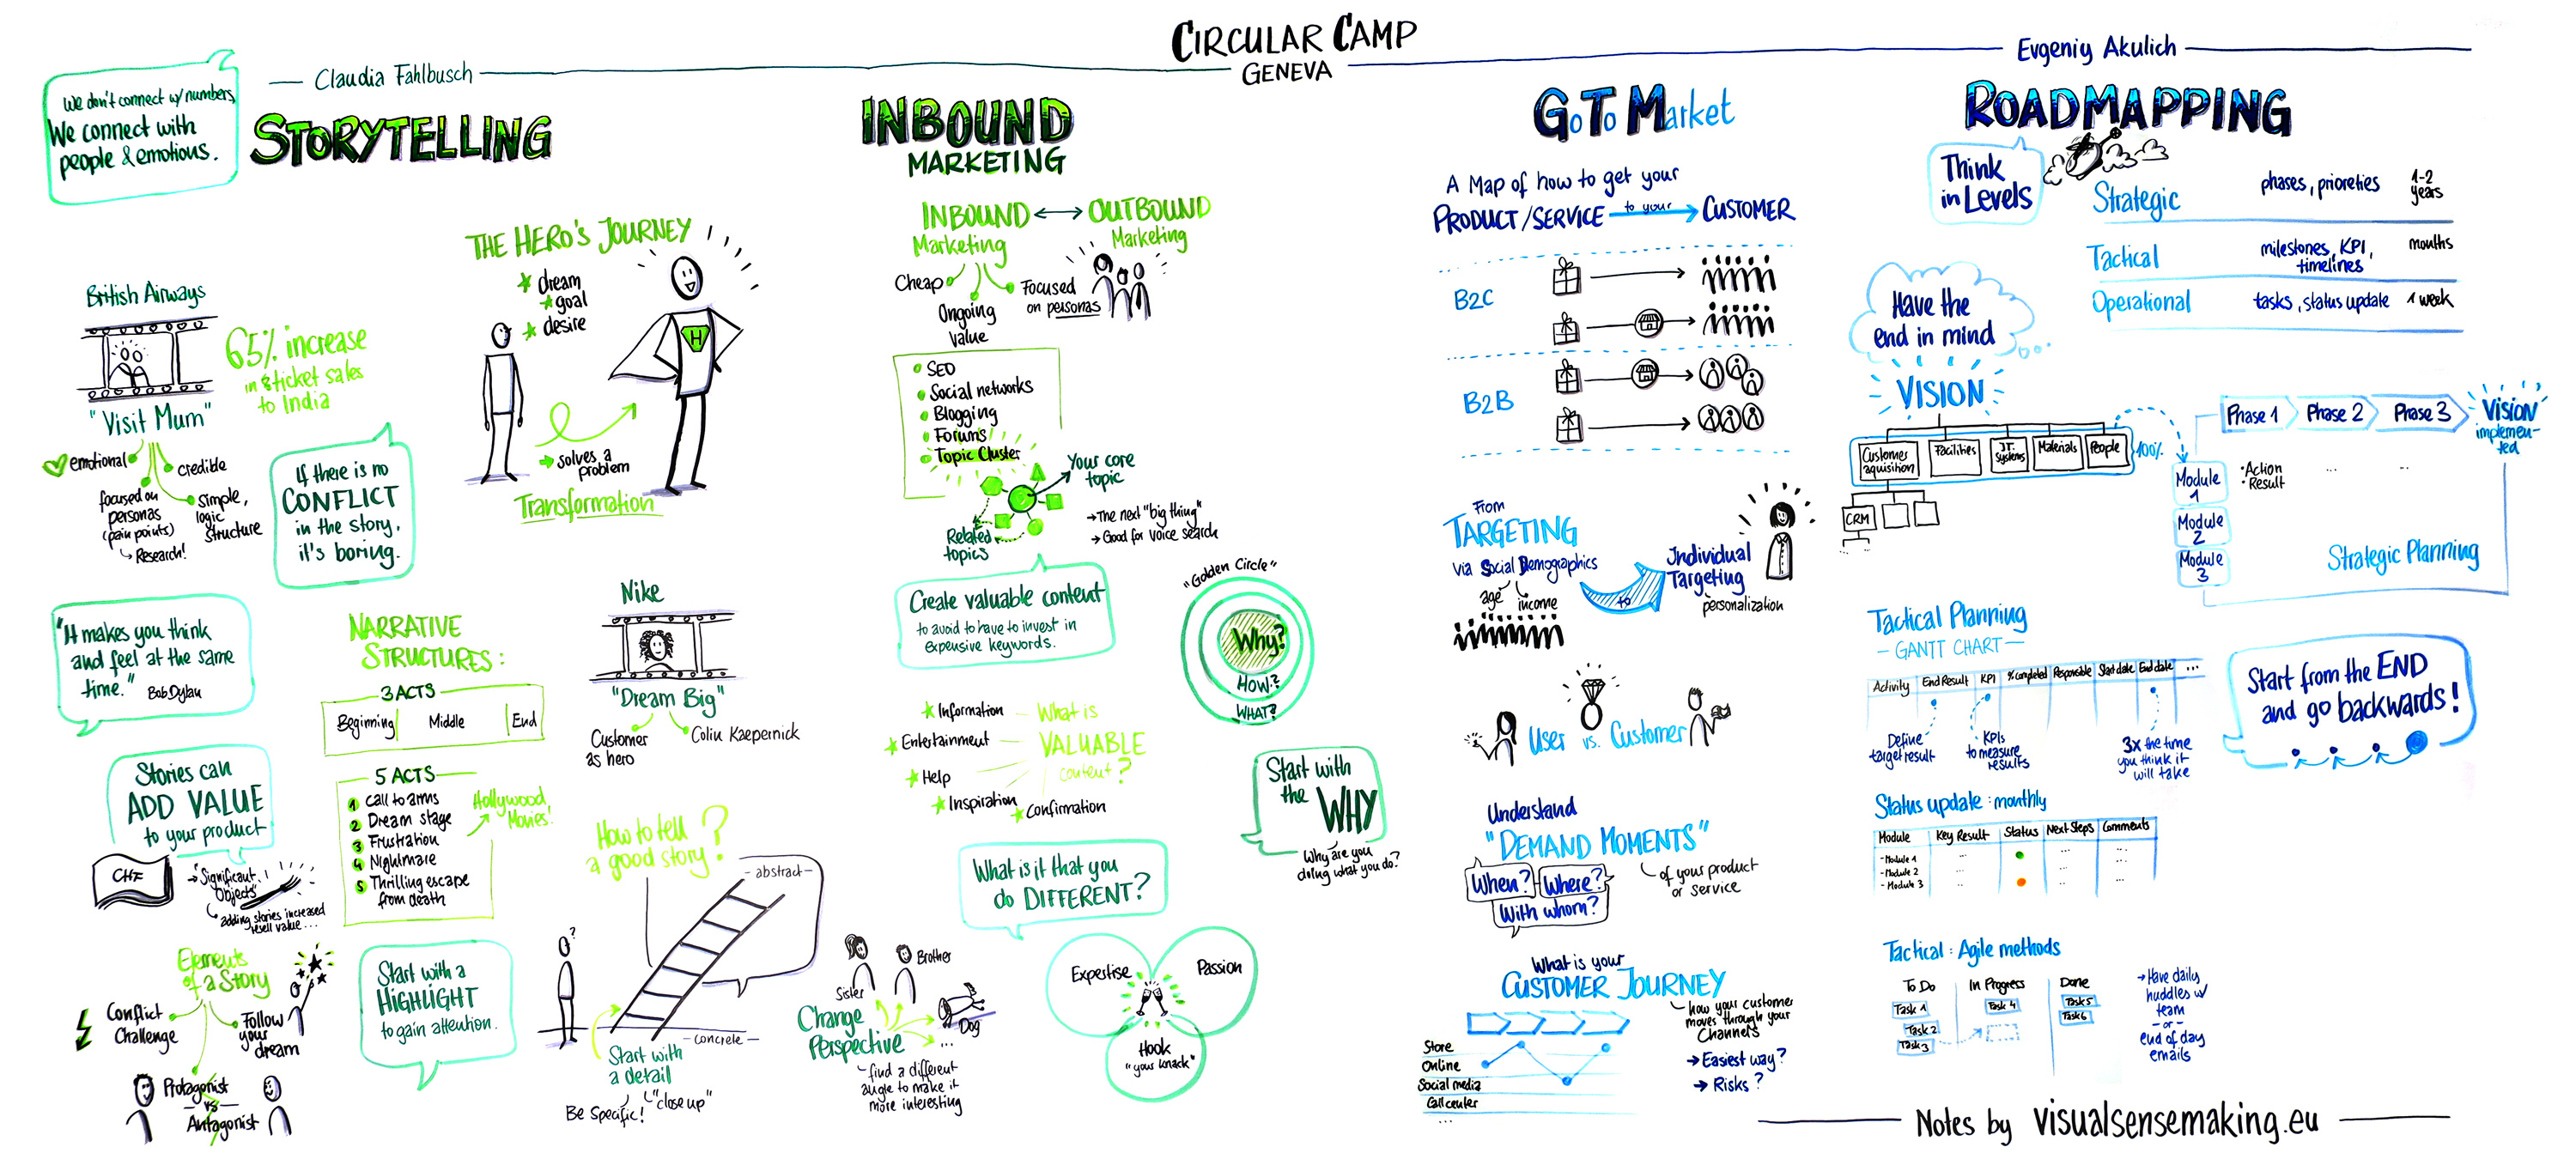 Graphic recording summarizing the workshops at the 'Circular Camp Geneva'